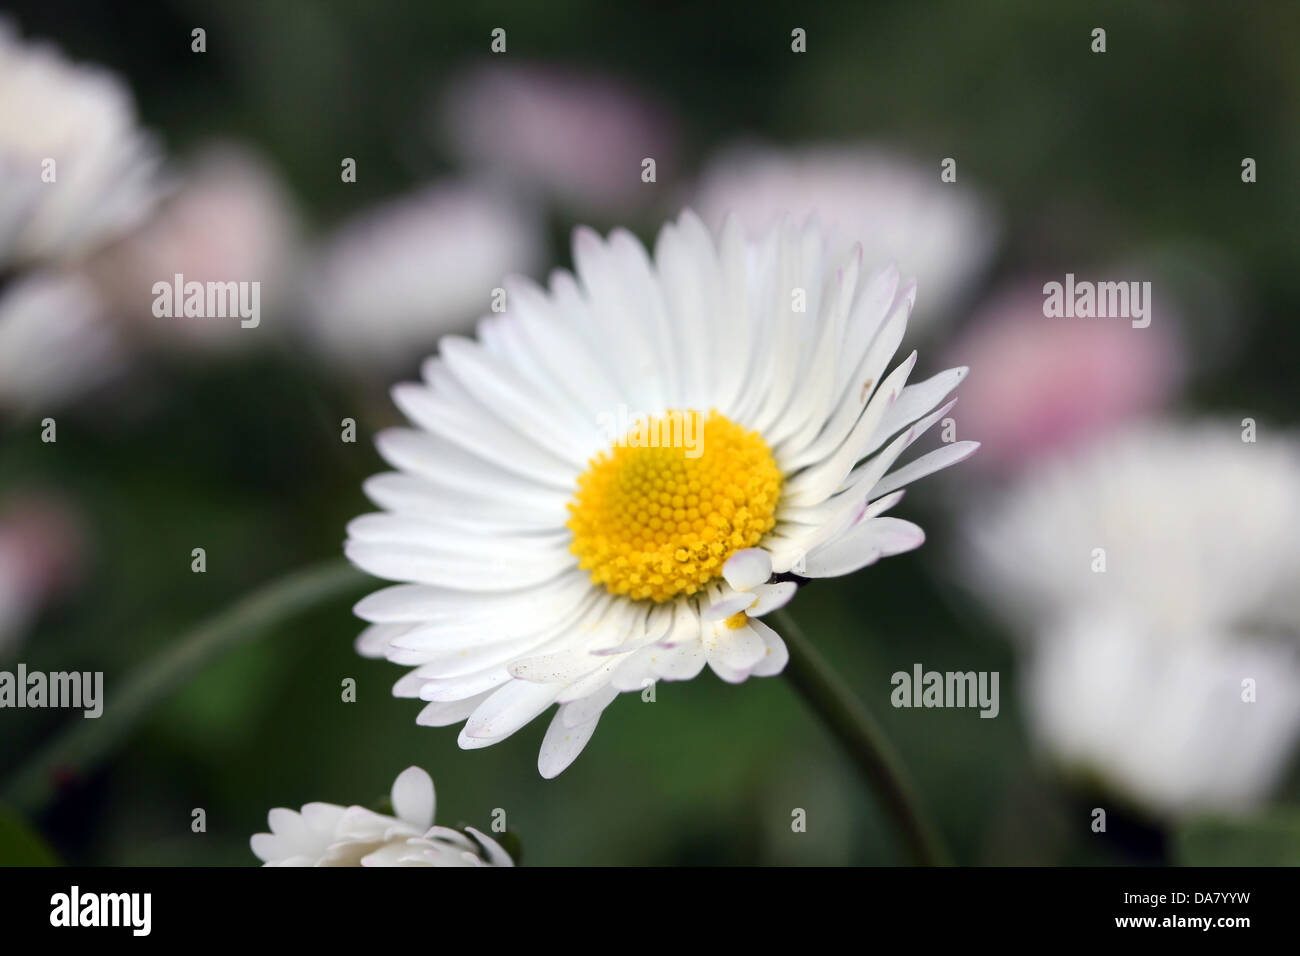 Closeup shot of white daisy flower, with shallow dof. Stock Photo